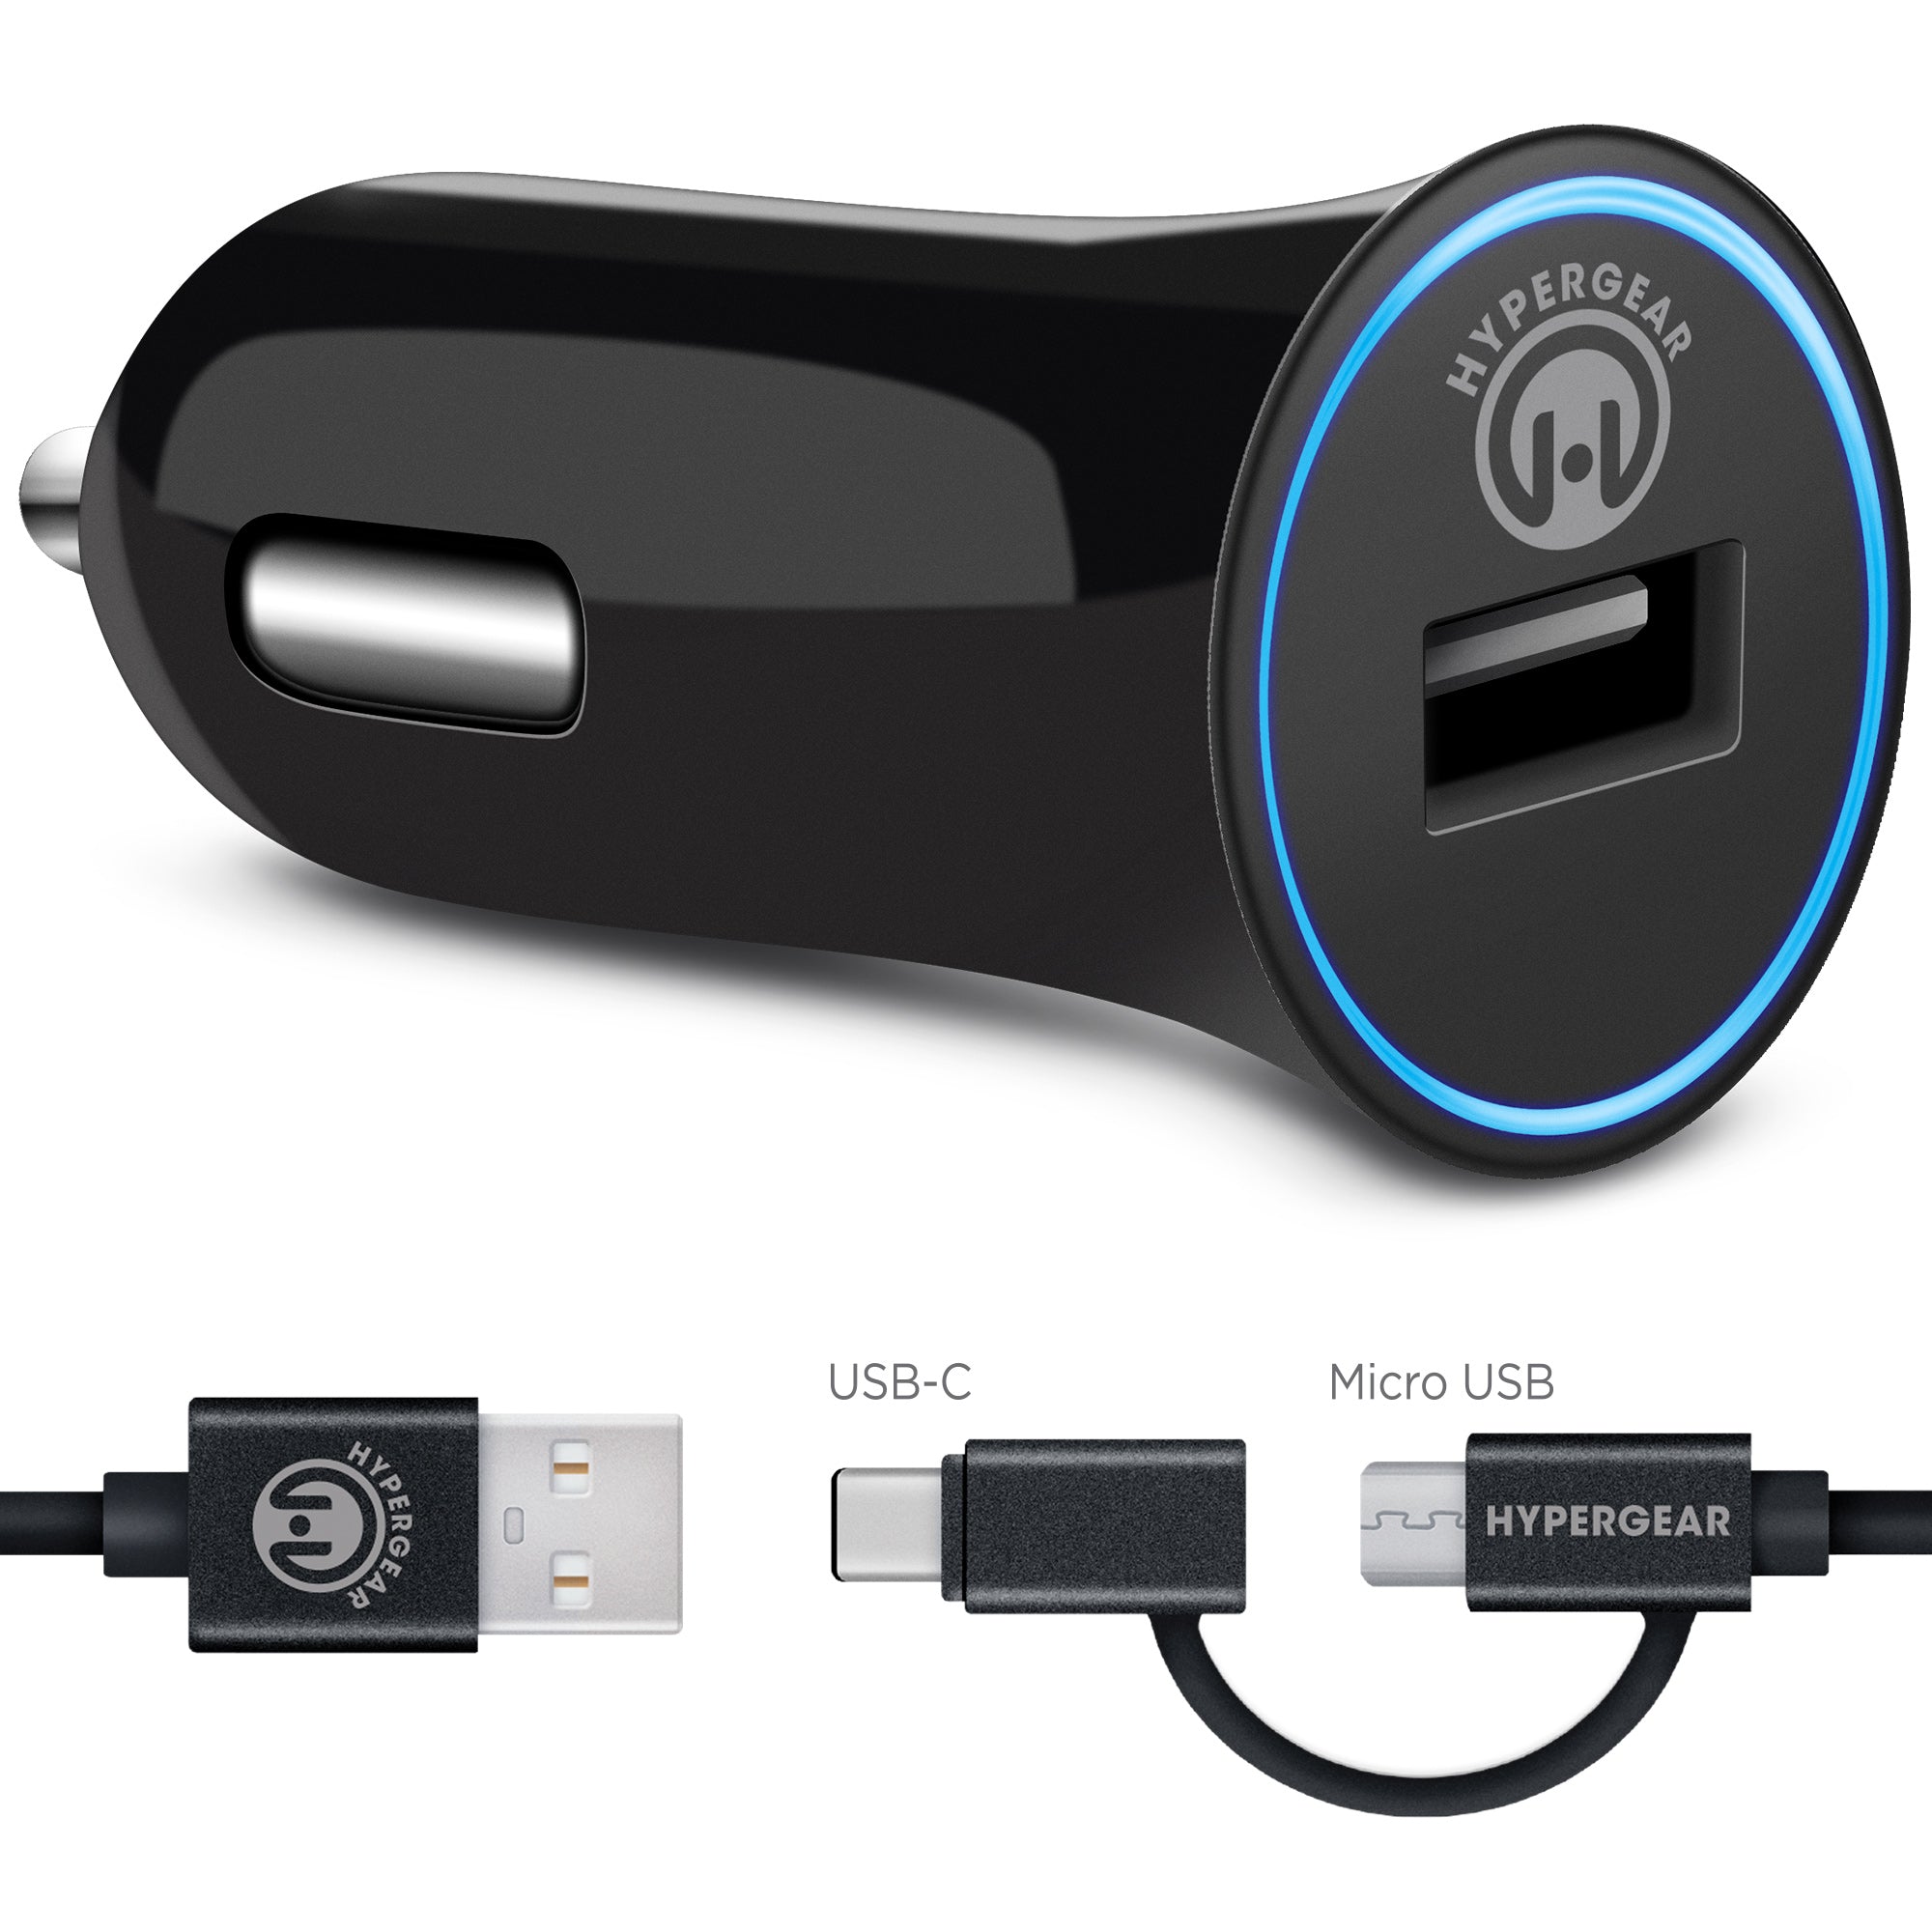 USB Car Charger & Micro USB